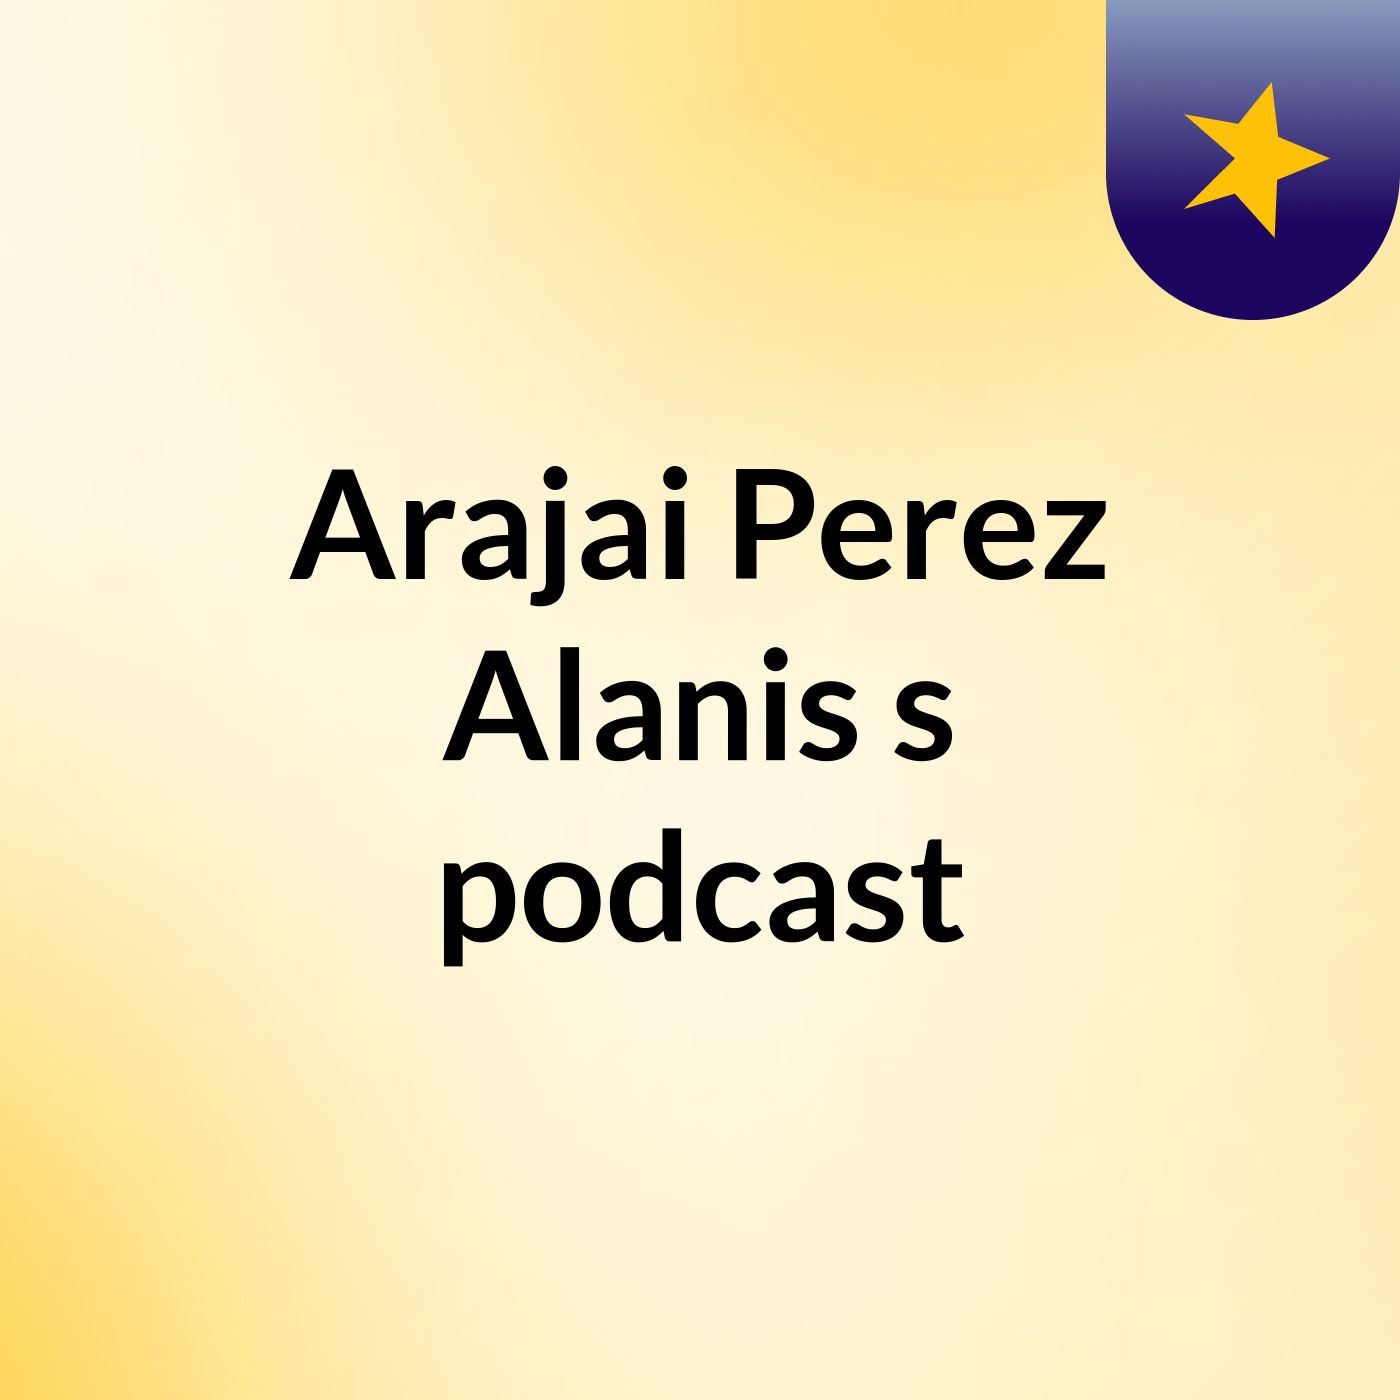 Arajai Perez Alanis's podcast